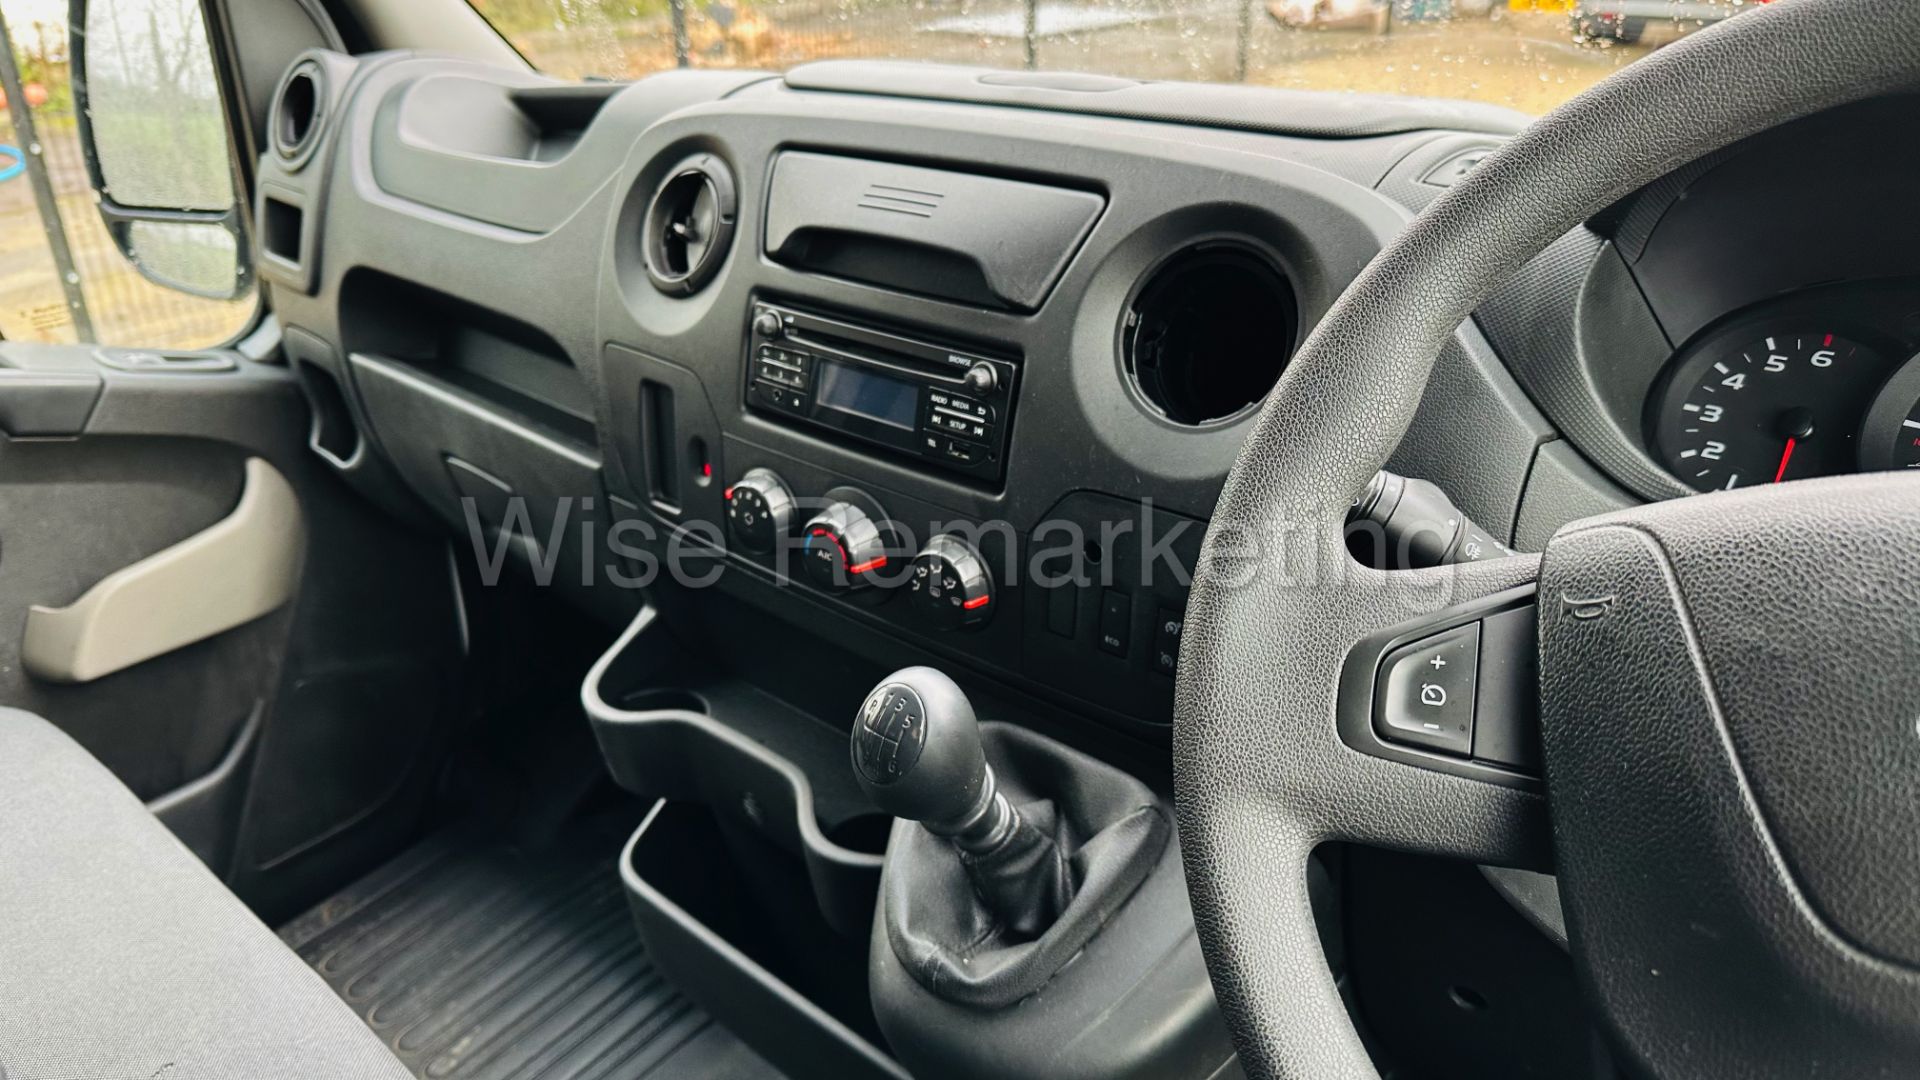 Renault Master 2.3 Dci *LWB Low Loader / Luton Box* (2019) Euro 6 / U-LEZ Compliant (3500 kg) *A/C* - Image 29 of 34